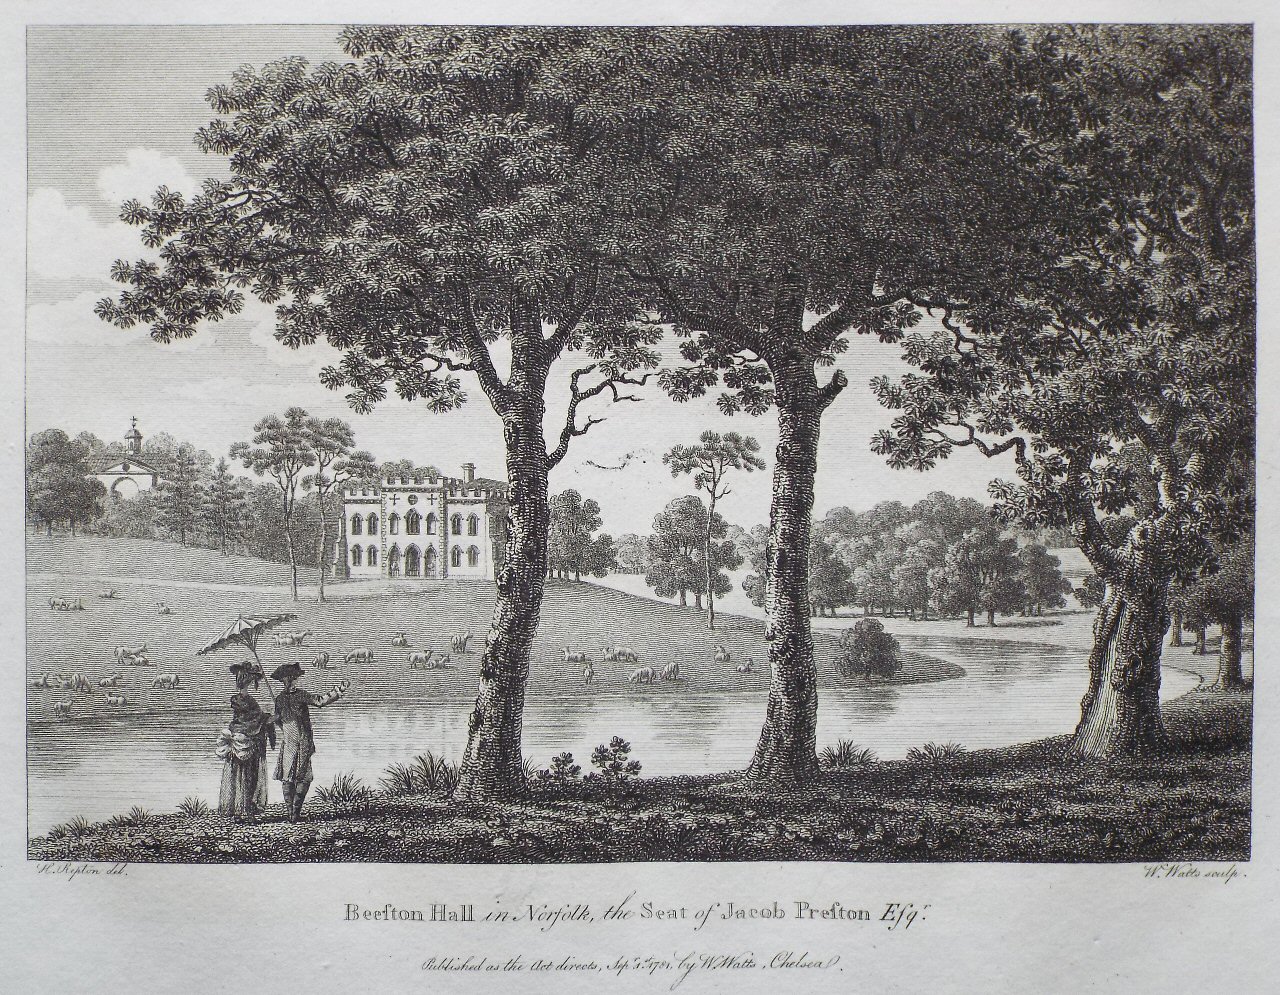 Print - Beeston Hall in Norfolk, the Seat of Jacob Preston Esqr. - Watts